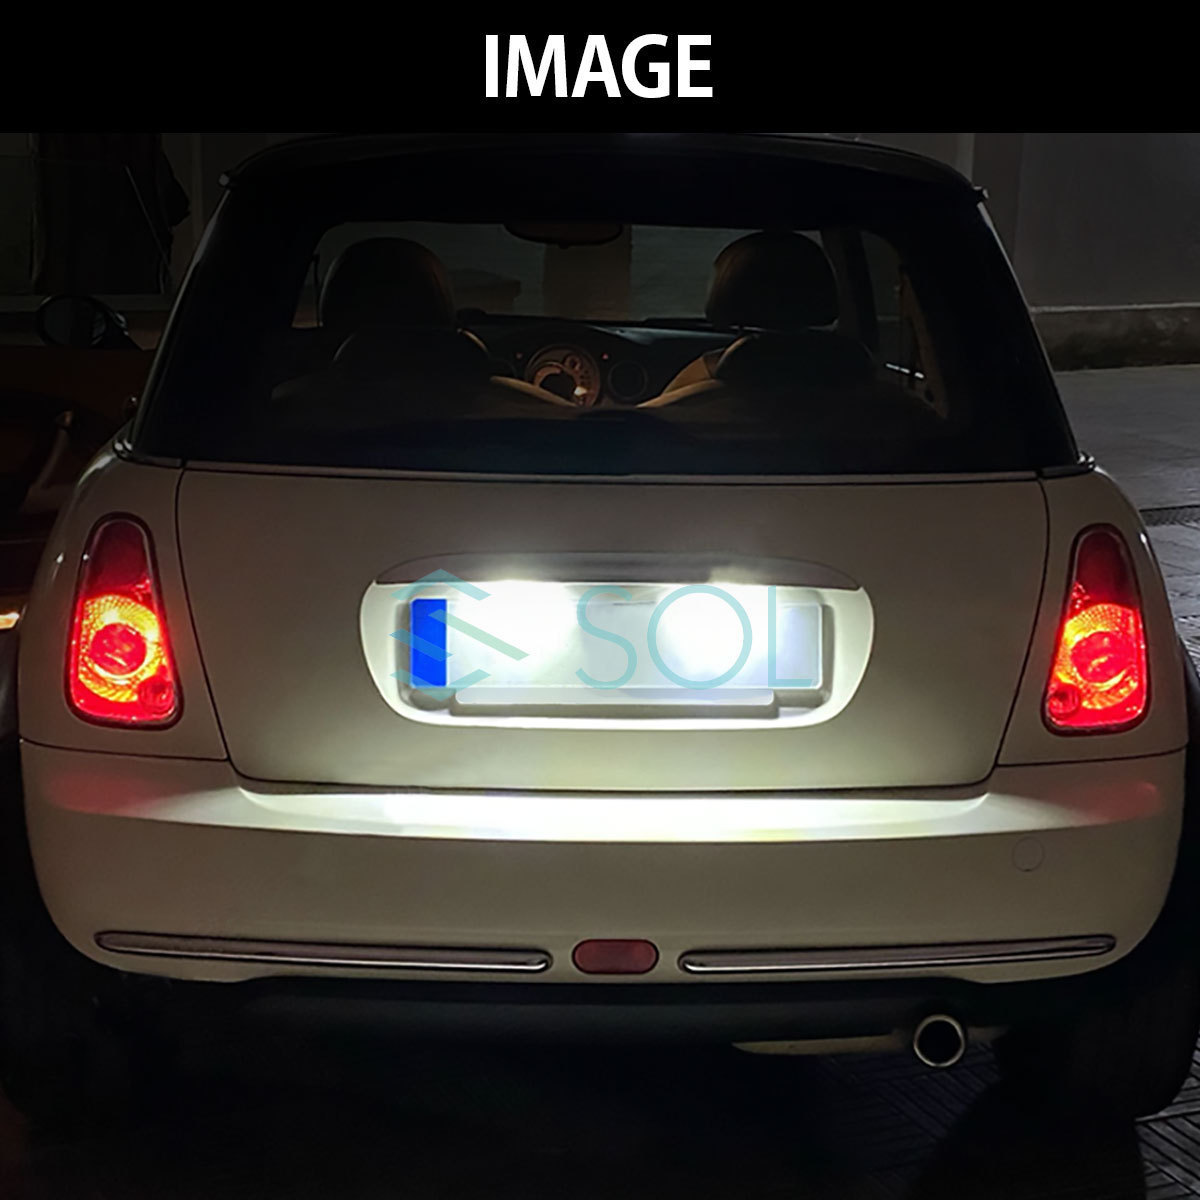 BMW MINI R50 R52 R53 専用 LEDナンバー灯 ユニットASSY キャンセラー内蔵 2個セット 51247114535 Eマーク取得品 出荷締切18時_画像5